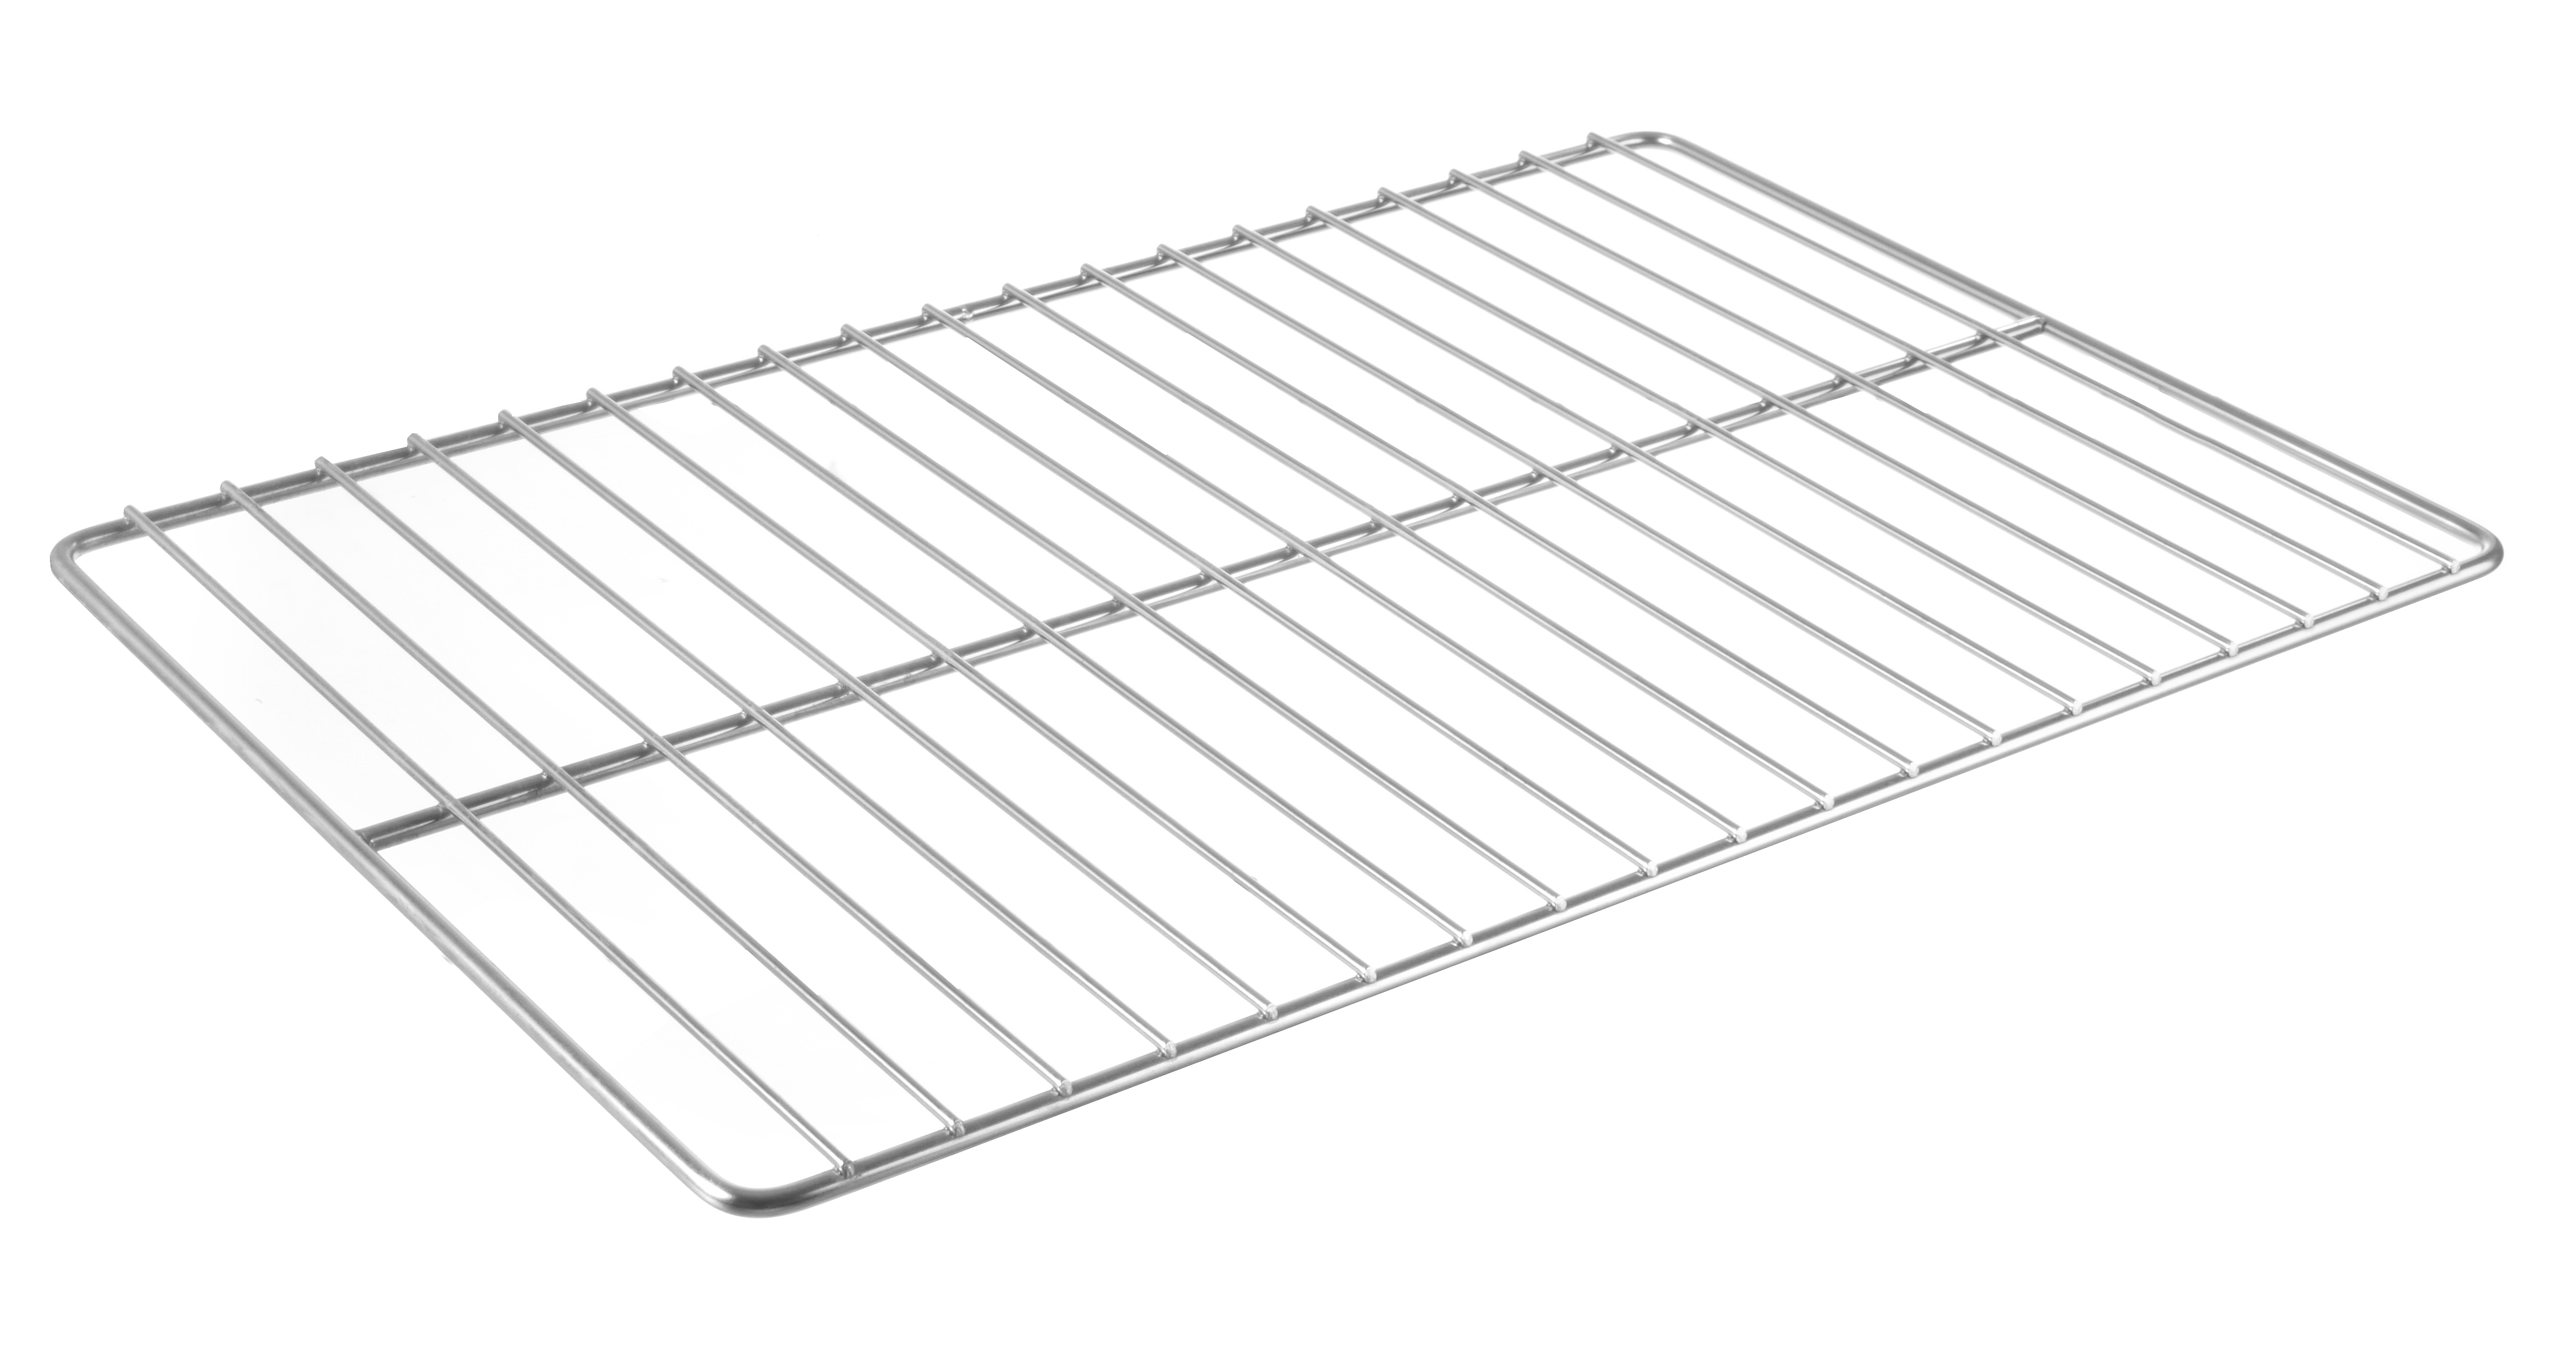 Grid s/s 600x400mm horizontal bars